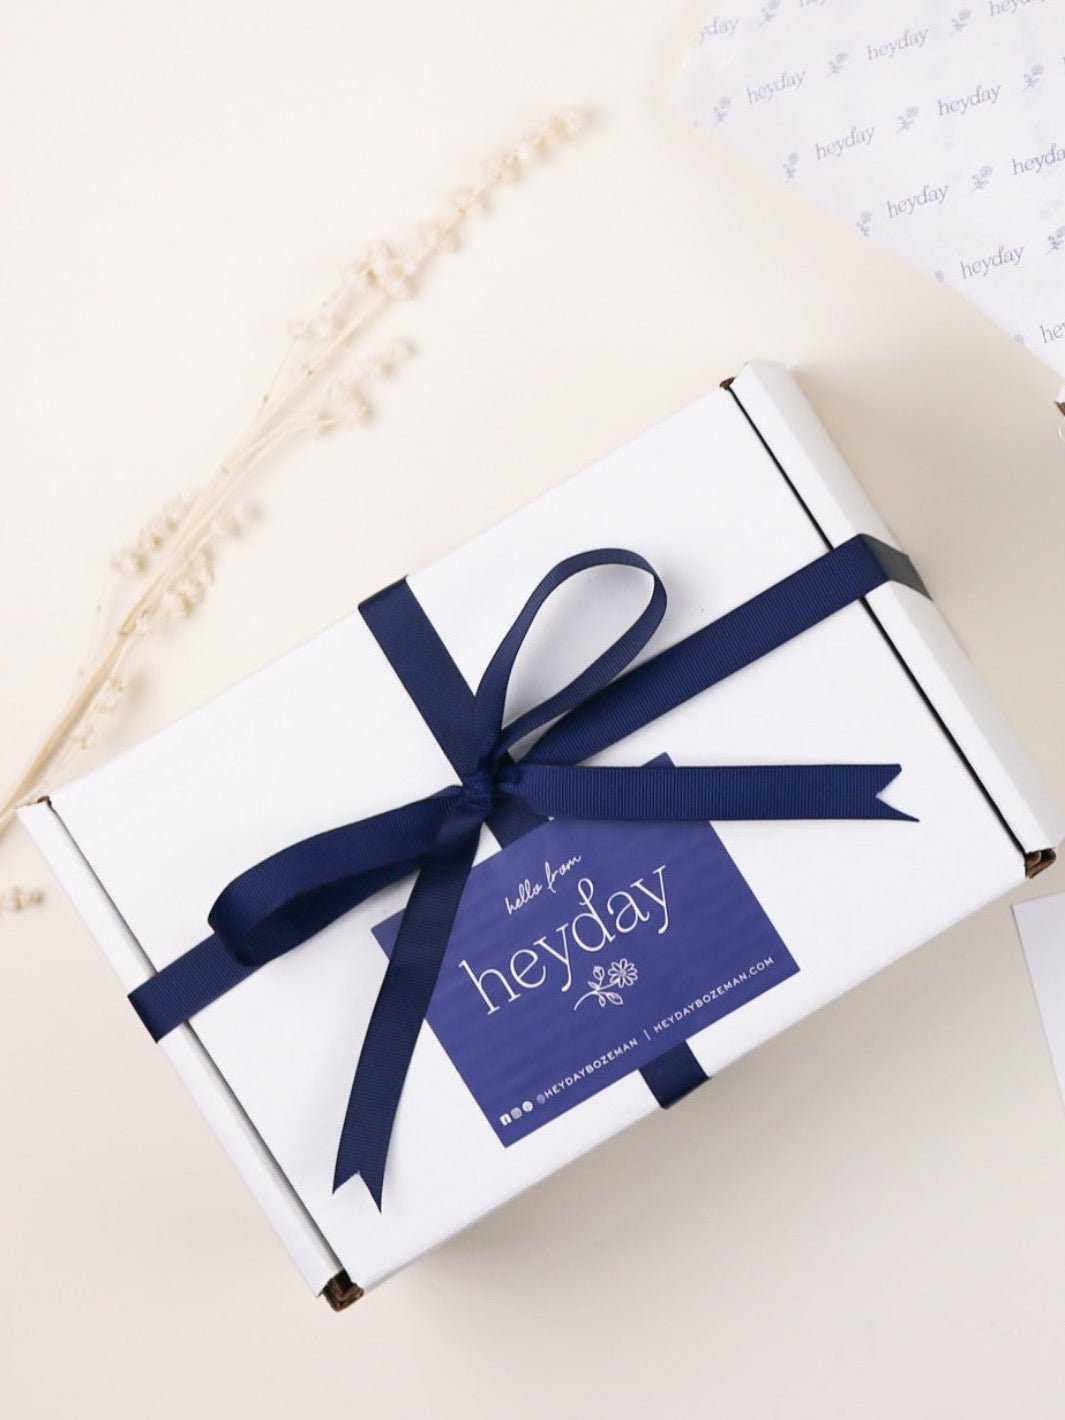 $5 Gift Box Packaging - Heyday